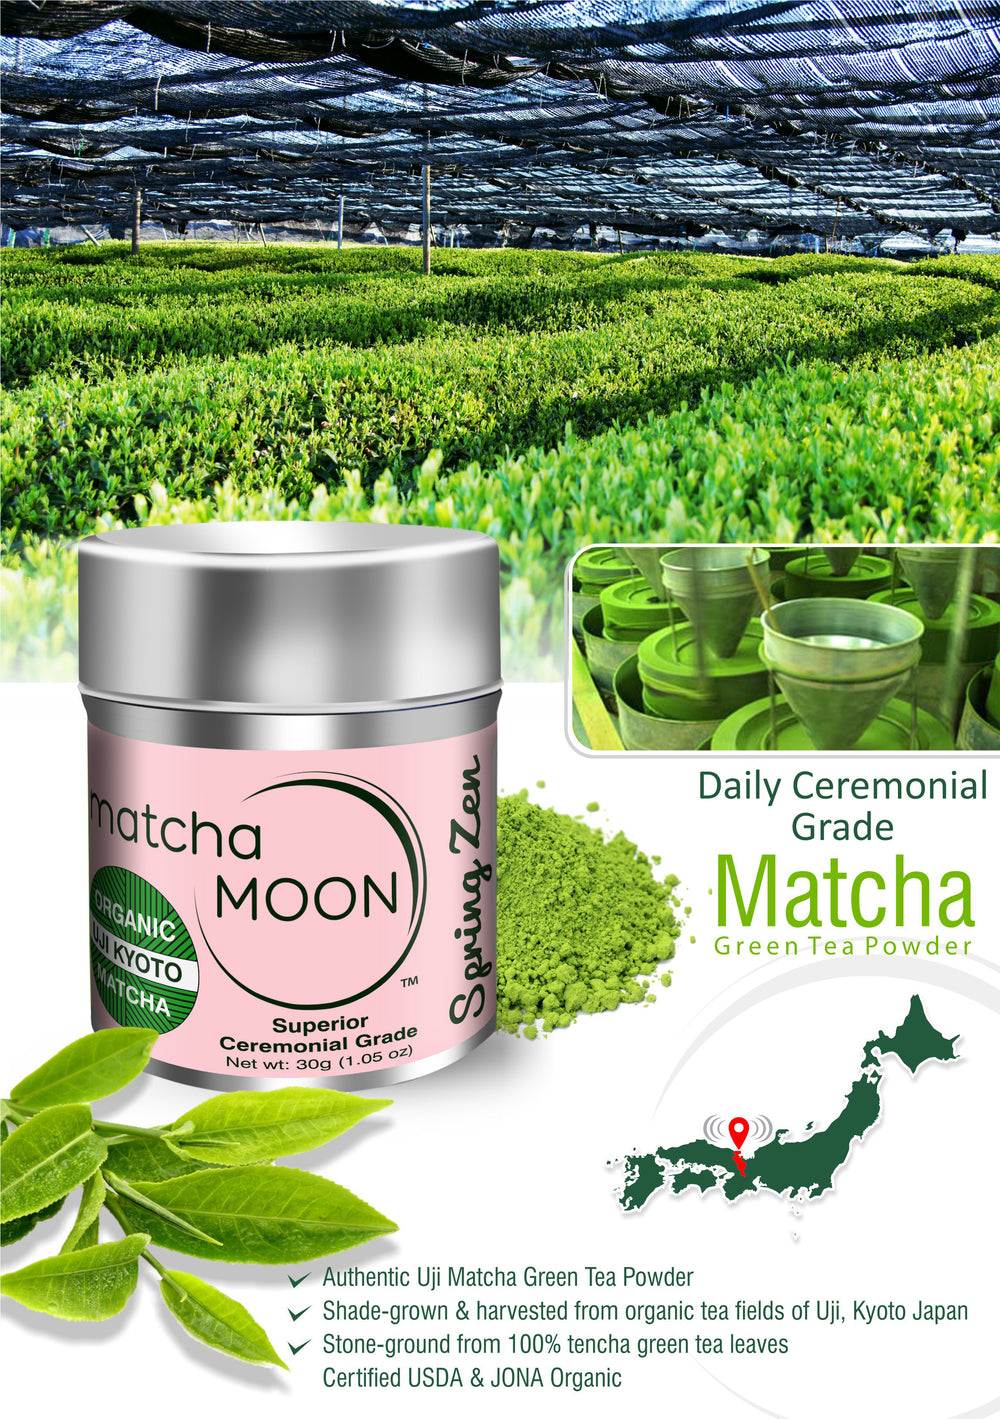 Spring Zen Matcha Green Tea Powder - Benefits